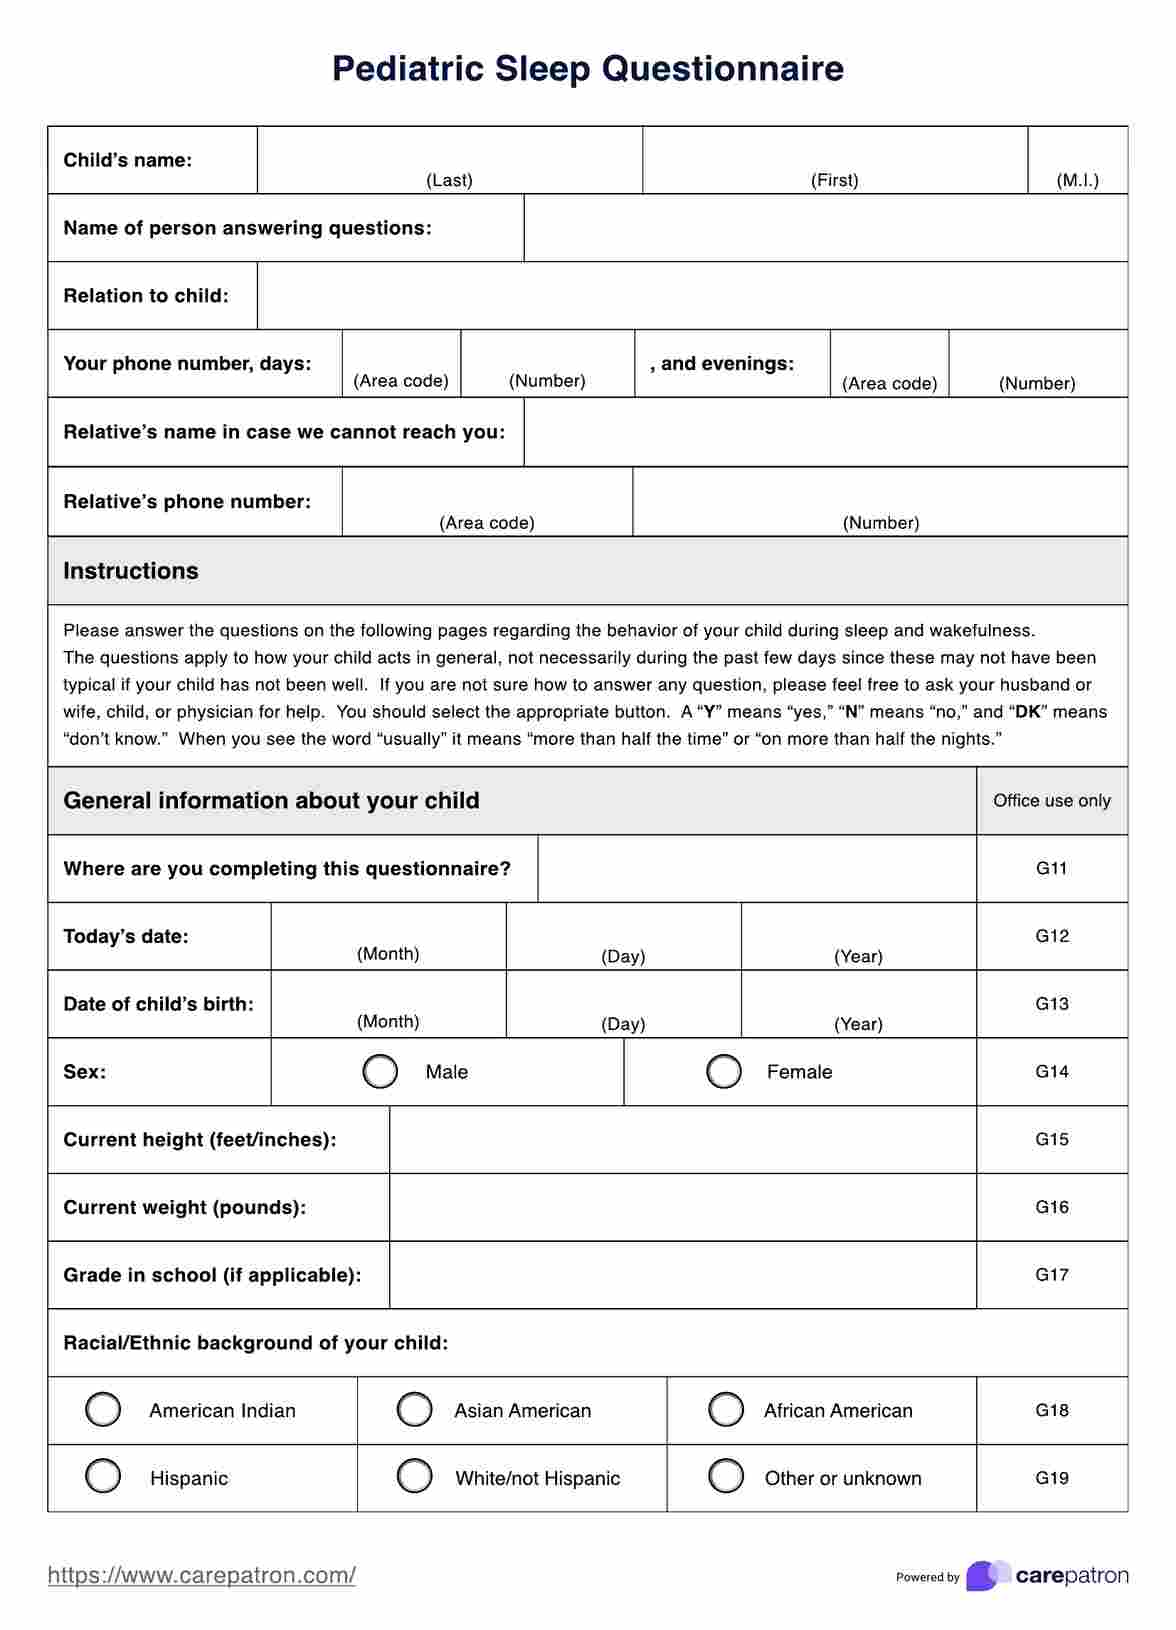 Pediatric Sleep Questionnaire PDF Example